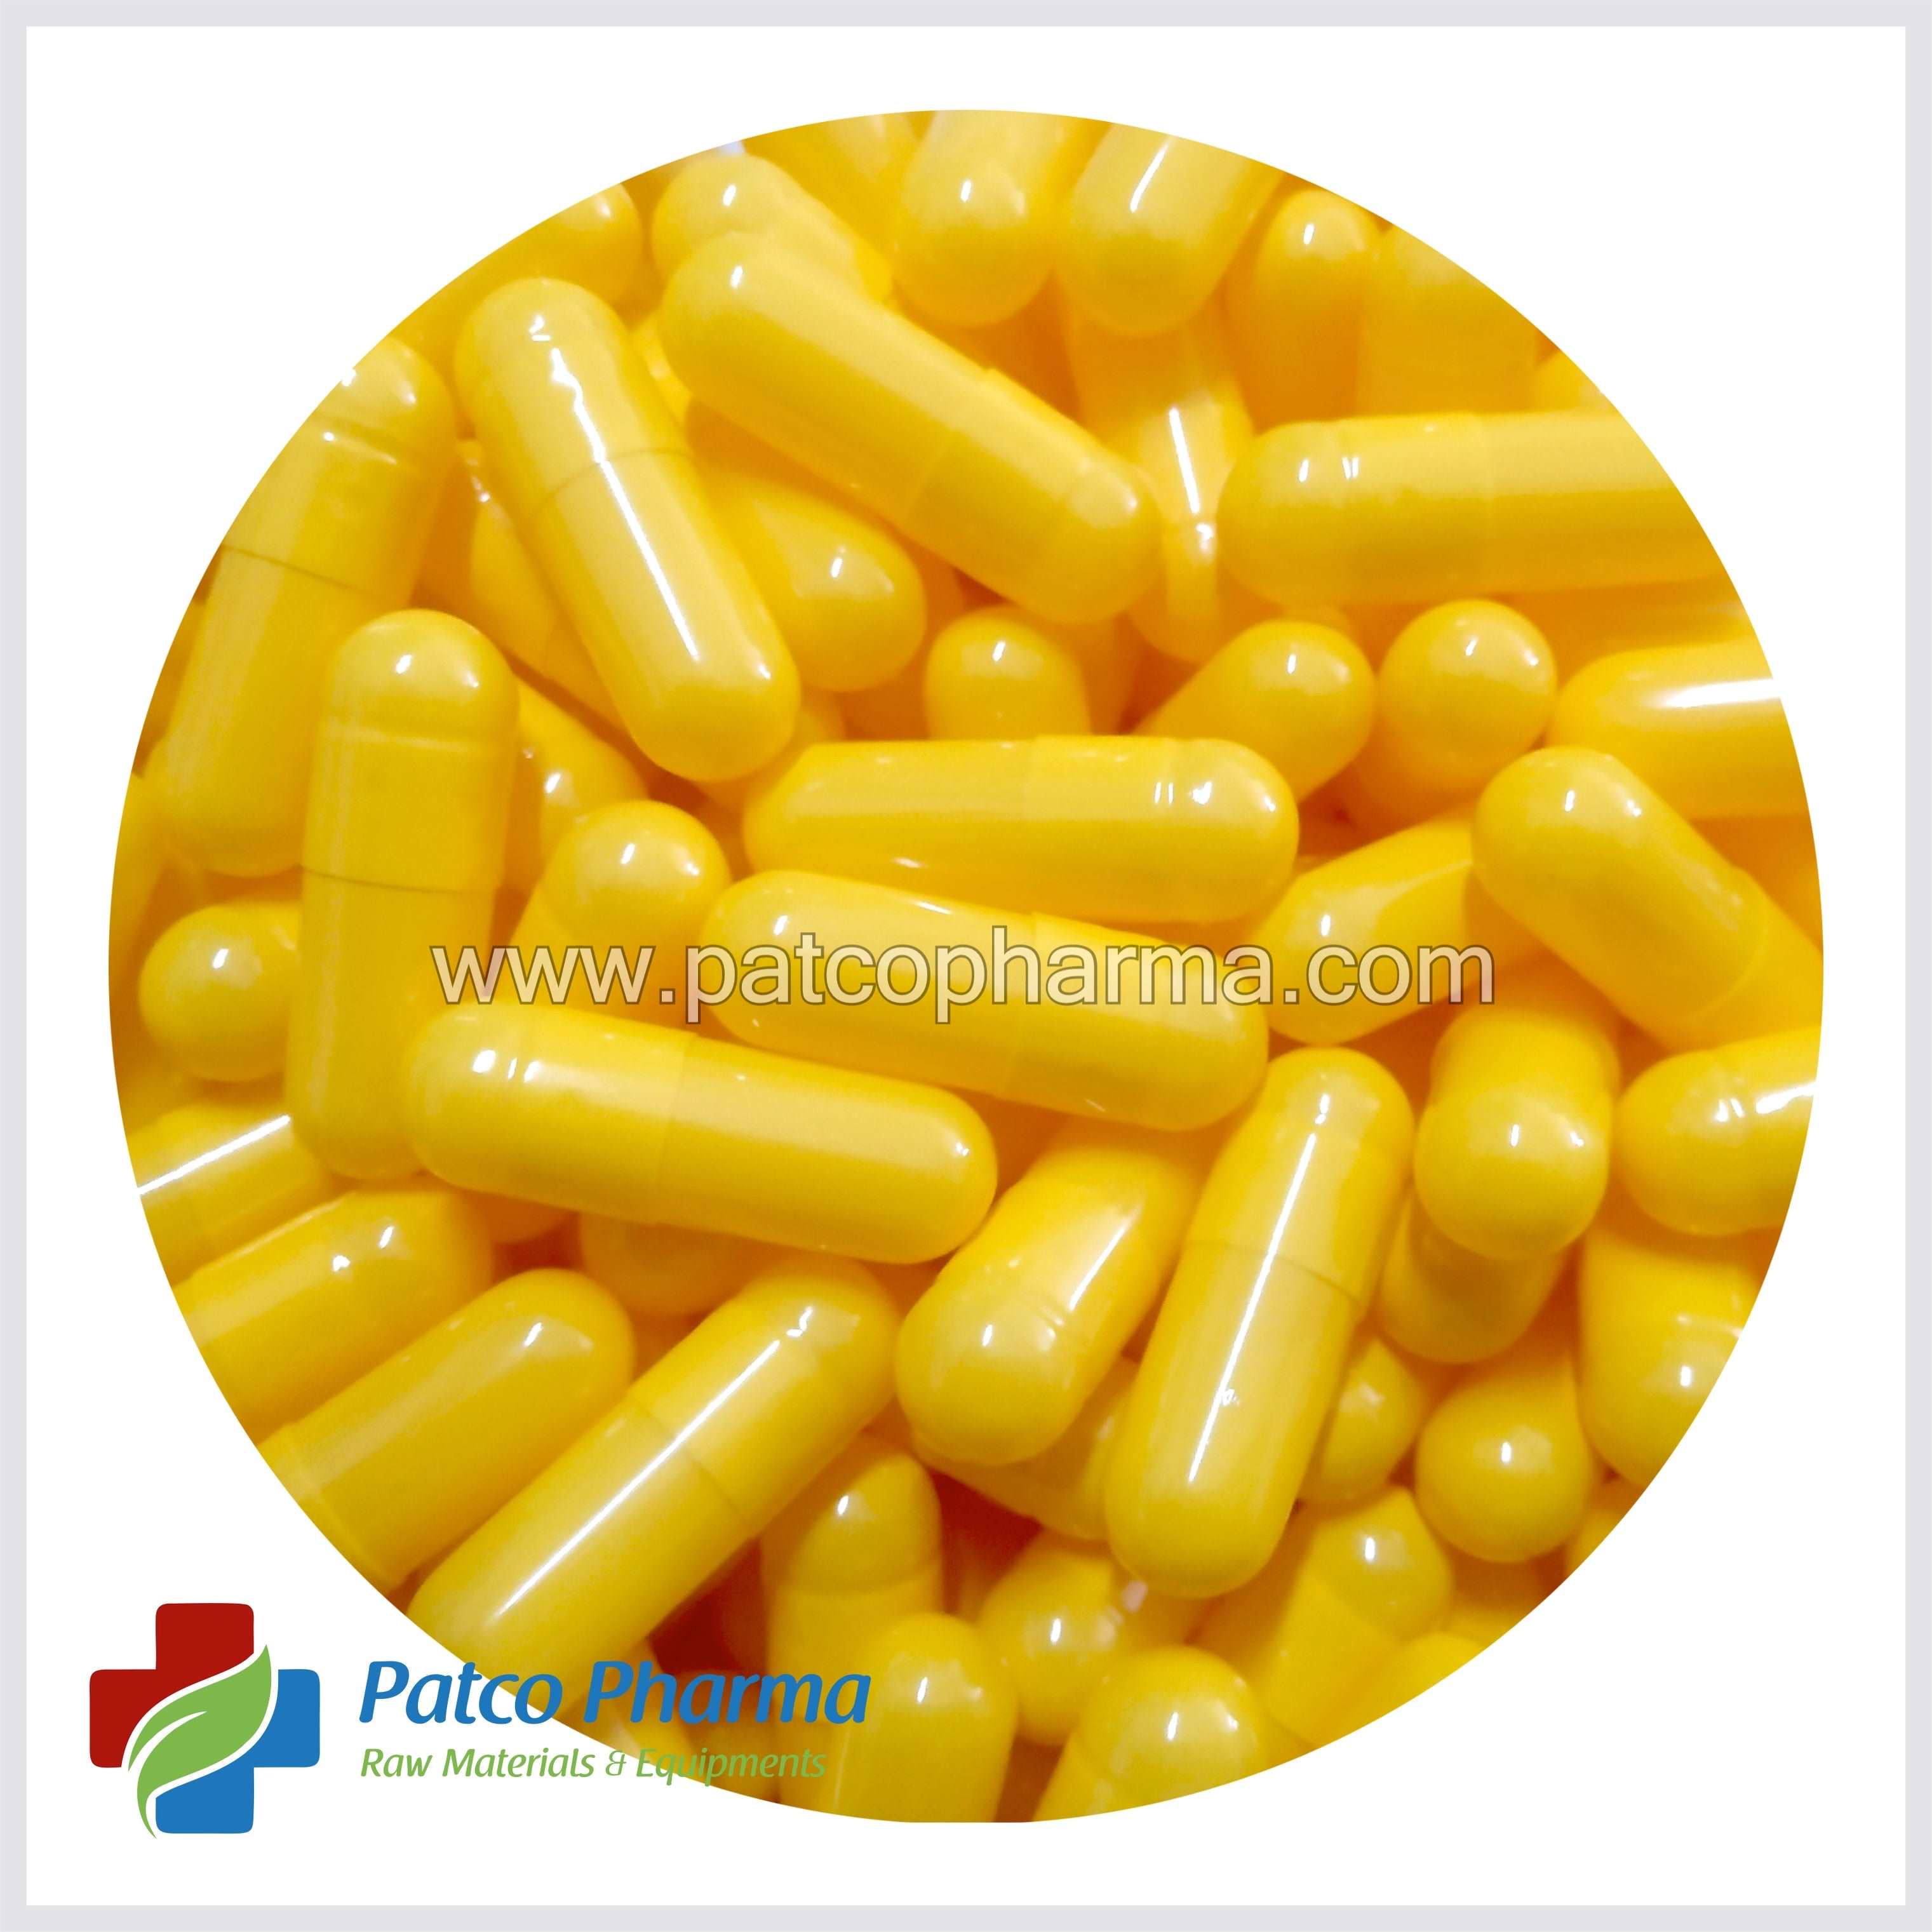 Size 00 Yellow Empty Vegatarian Capsule, Patco Pharma, HPMC capsules, size-00-yellow-empty-vegetarian-capsule, "1000 mg capsule, Size 00 Capsule, Vegetarian capsule, Yellow Capsule", Patco Pharma